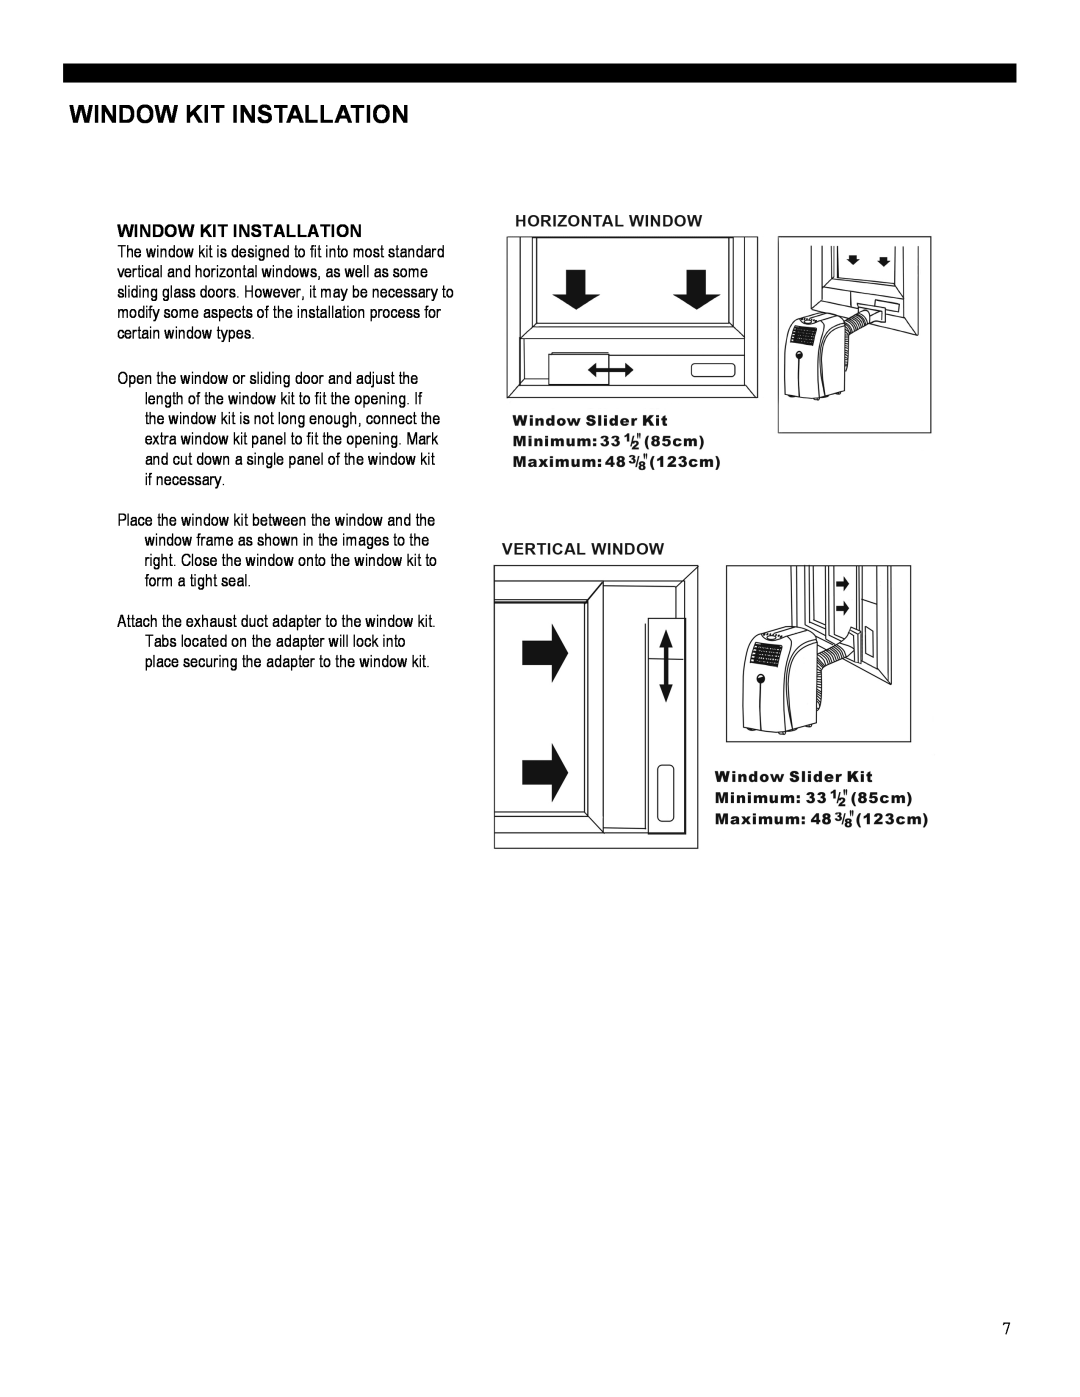 Soleus Air PH3-09R-03, PH3-10R-03 manual Window Kit Installation 